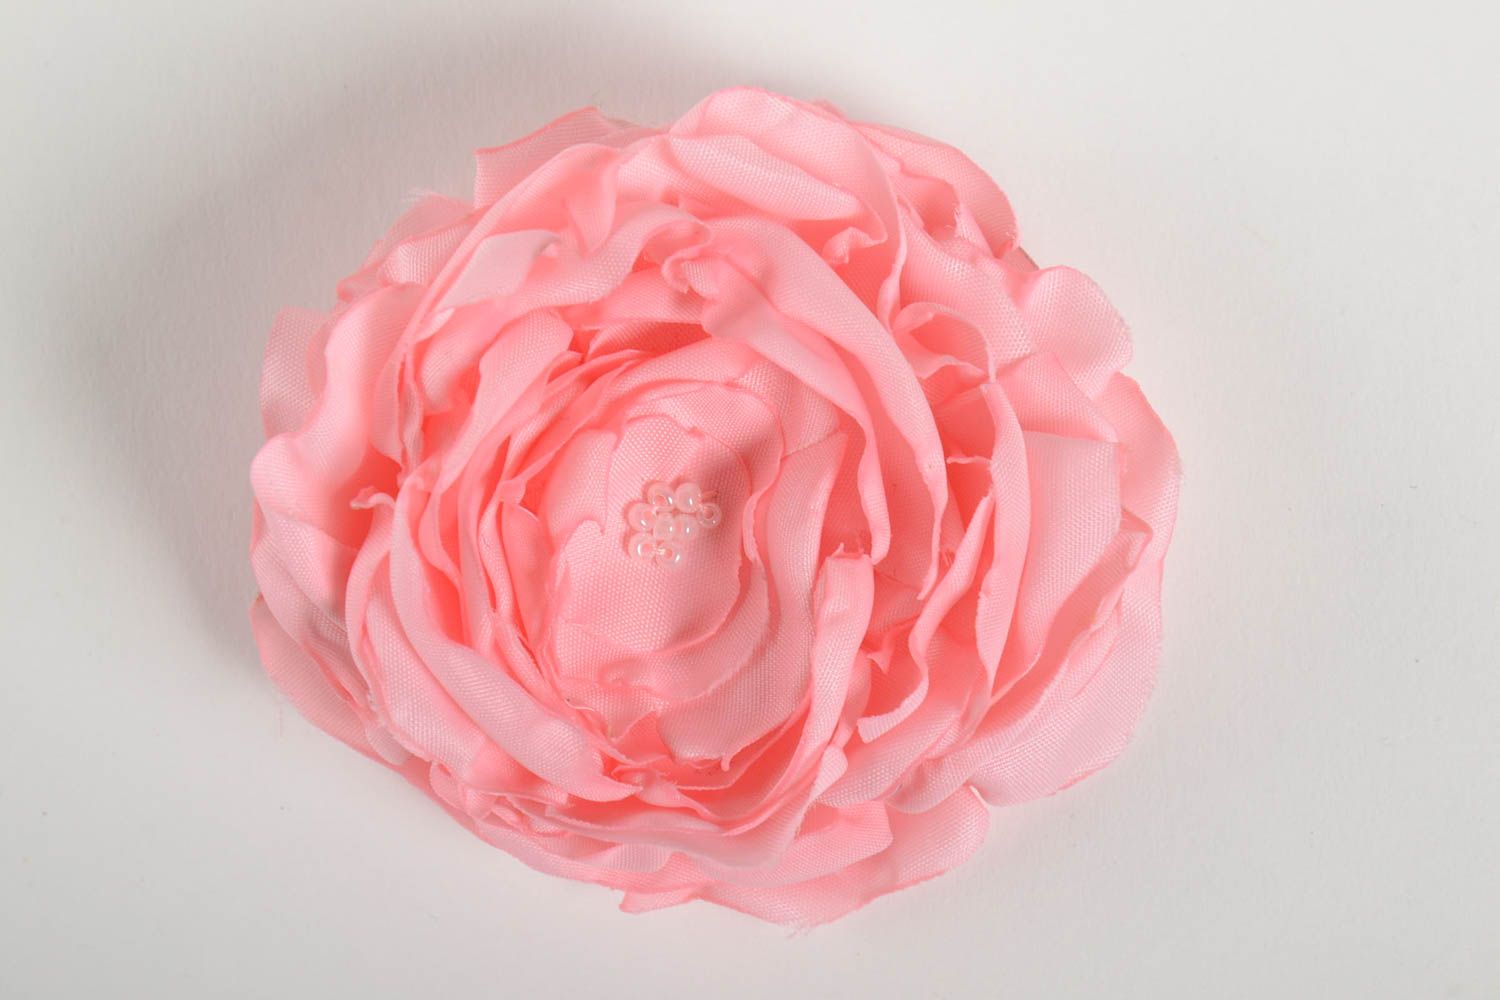 Заколка цветок из ткани розовая нежная пышная ручной работы красивая хэнд мейд фото 4